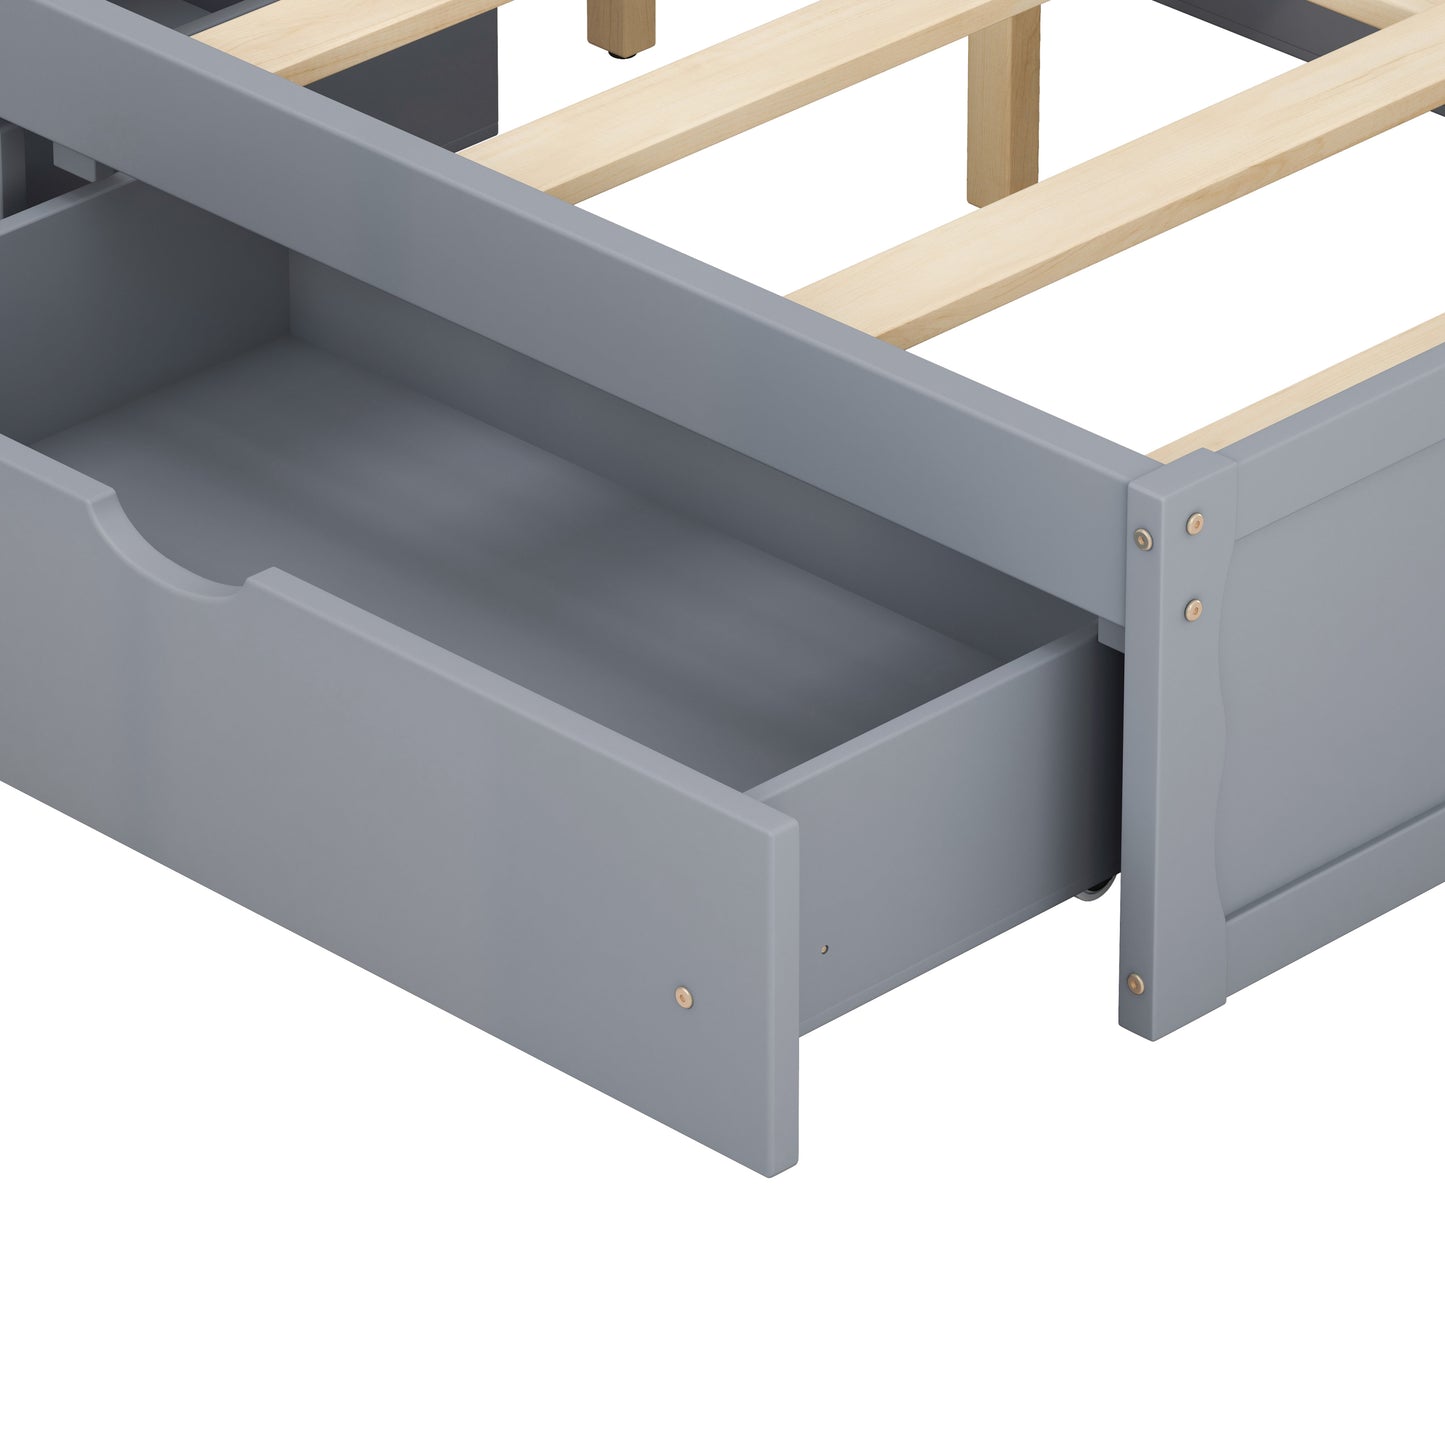 Jordan Multi-functional Full Size Bed Frame w/ Underbed storage